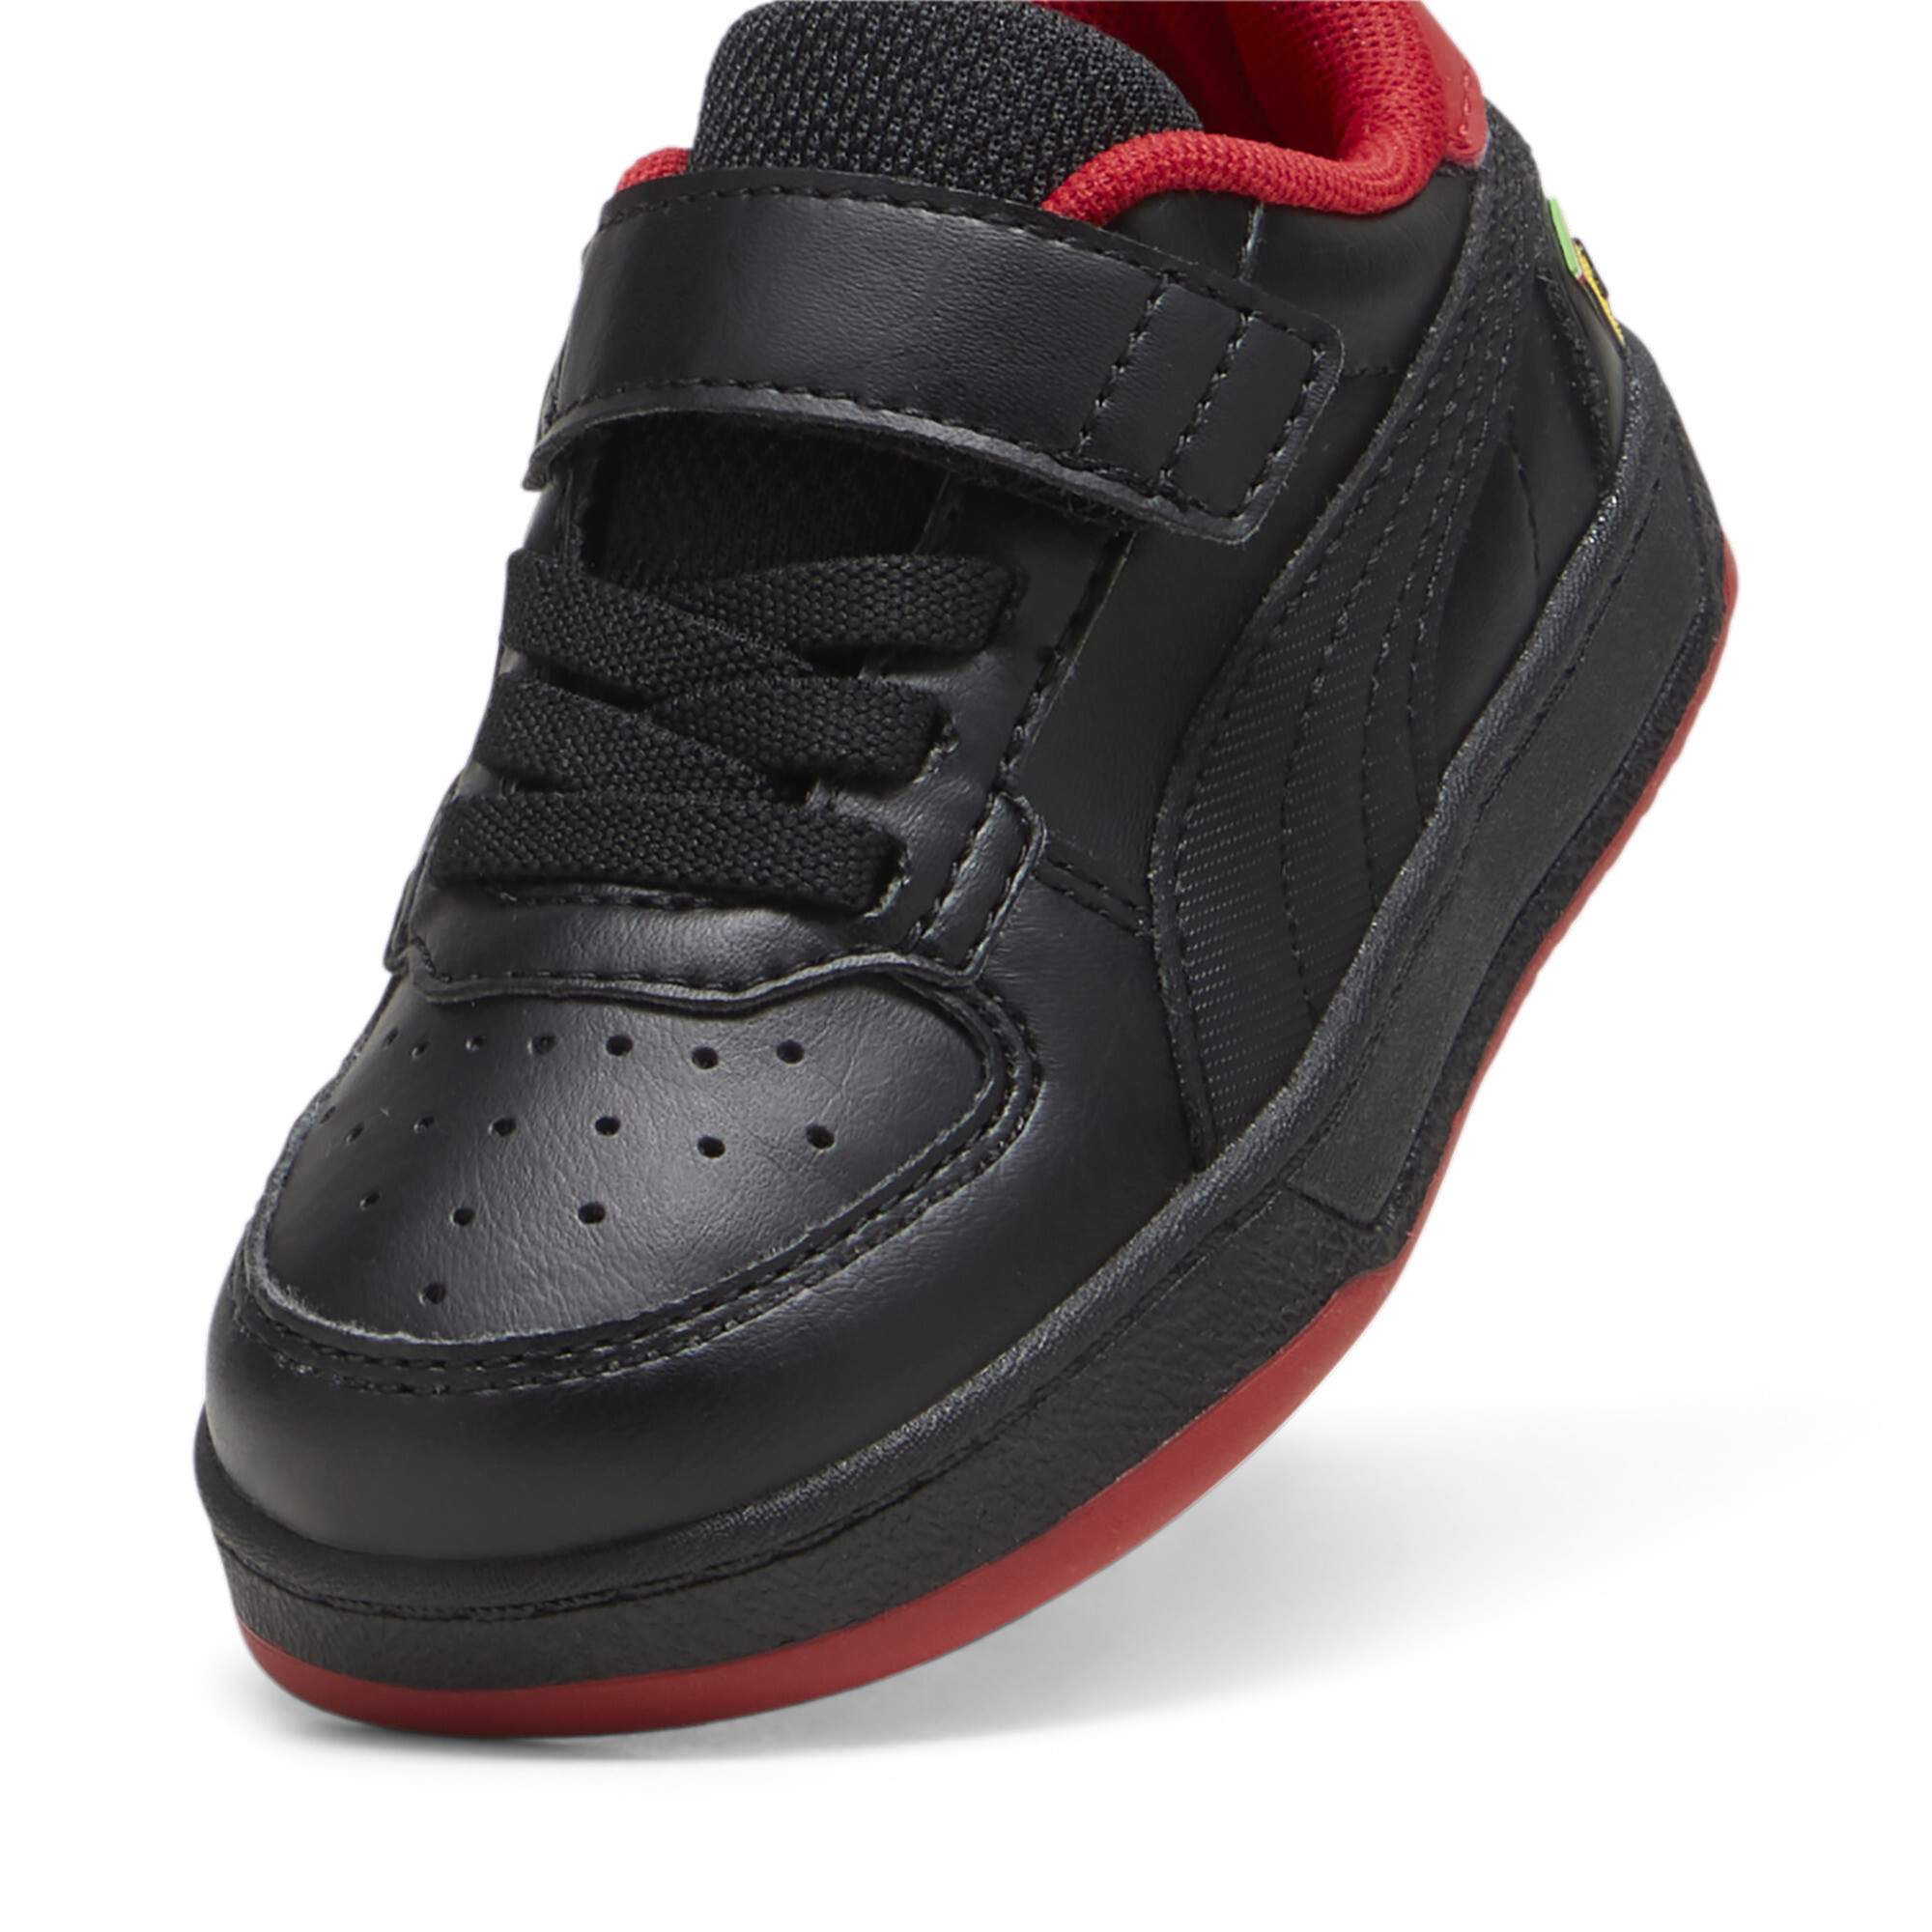 Puma Scuderia Ferrari Caven 2.0 Toddlers' Sneakers, Black, Size 24, Shoes